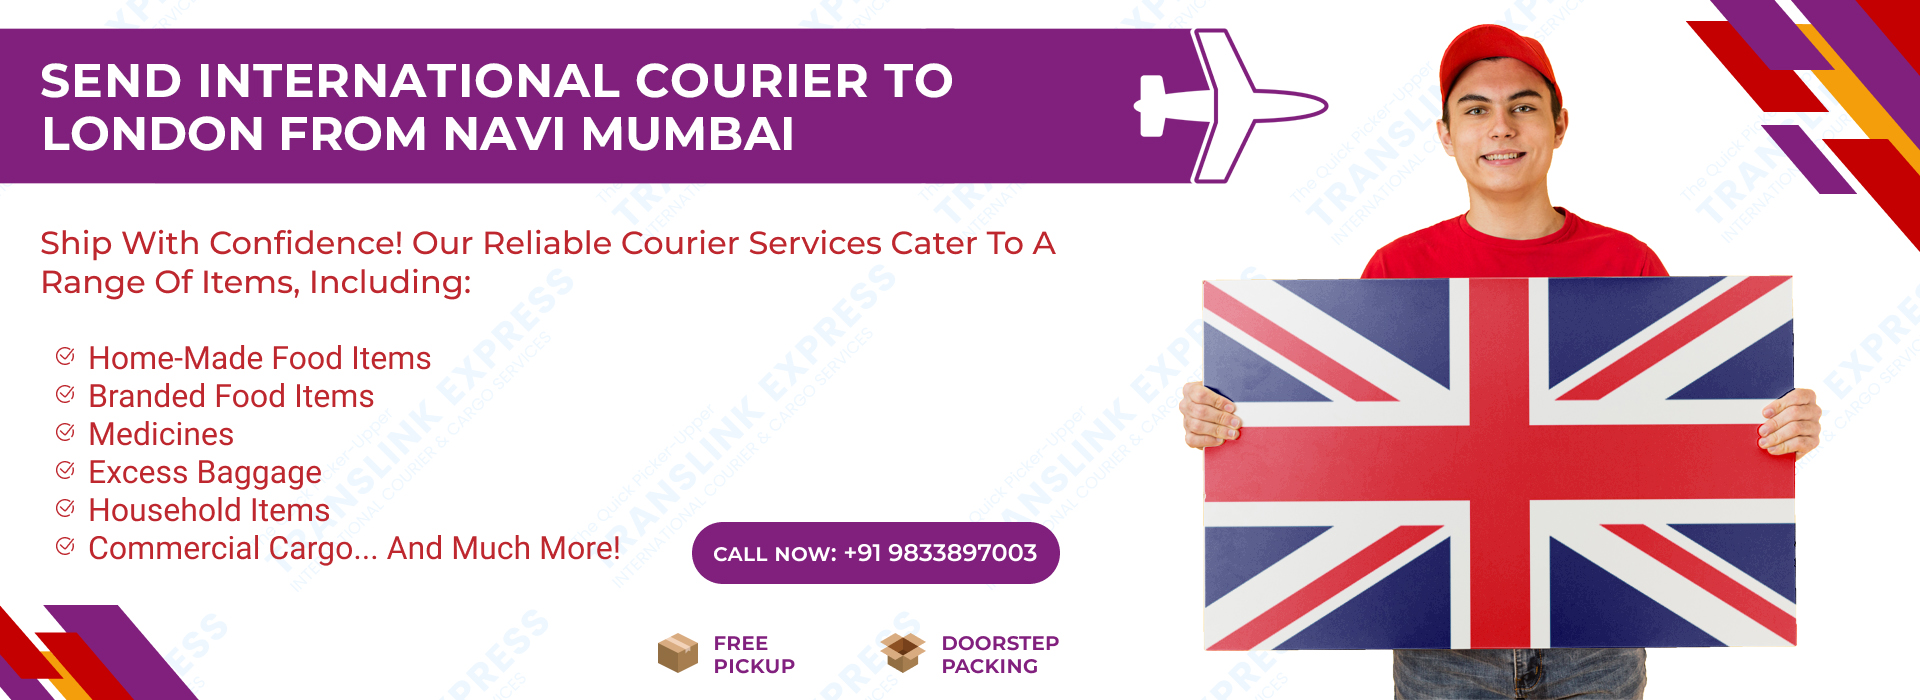 Courier to London From Navi Mumbai